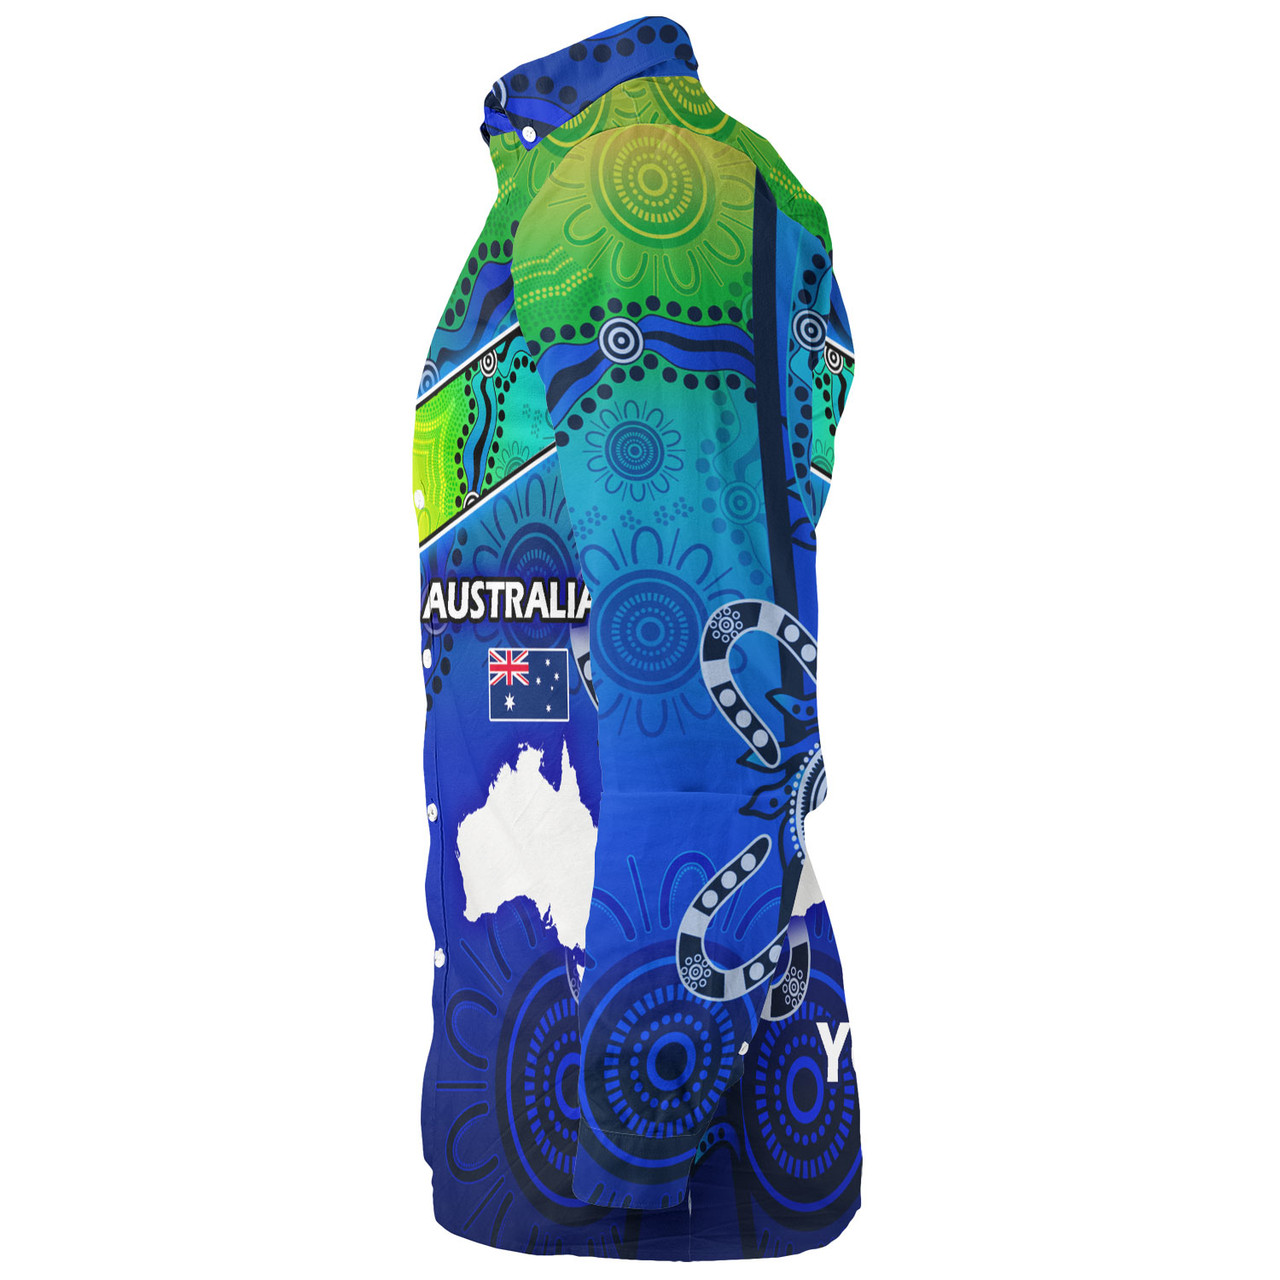 Fiji And Australia Custom Personalised Long Sleeve Shirt Fijian Tapa With Australia Aboriginal Style